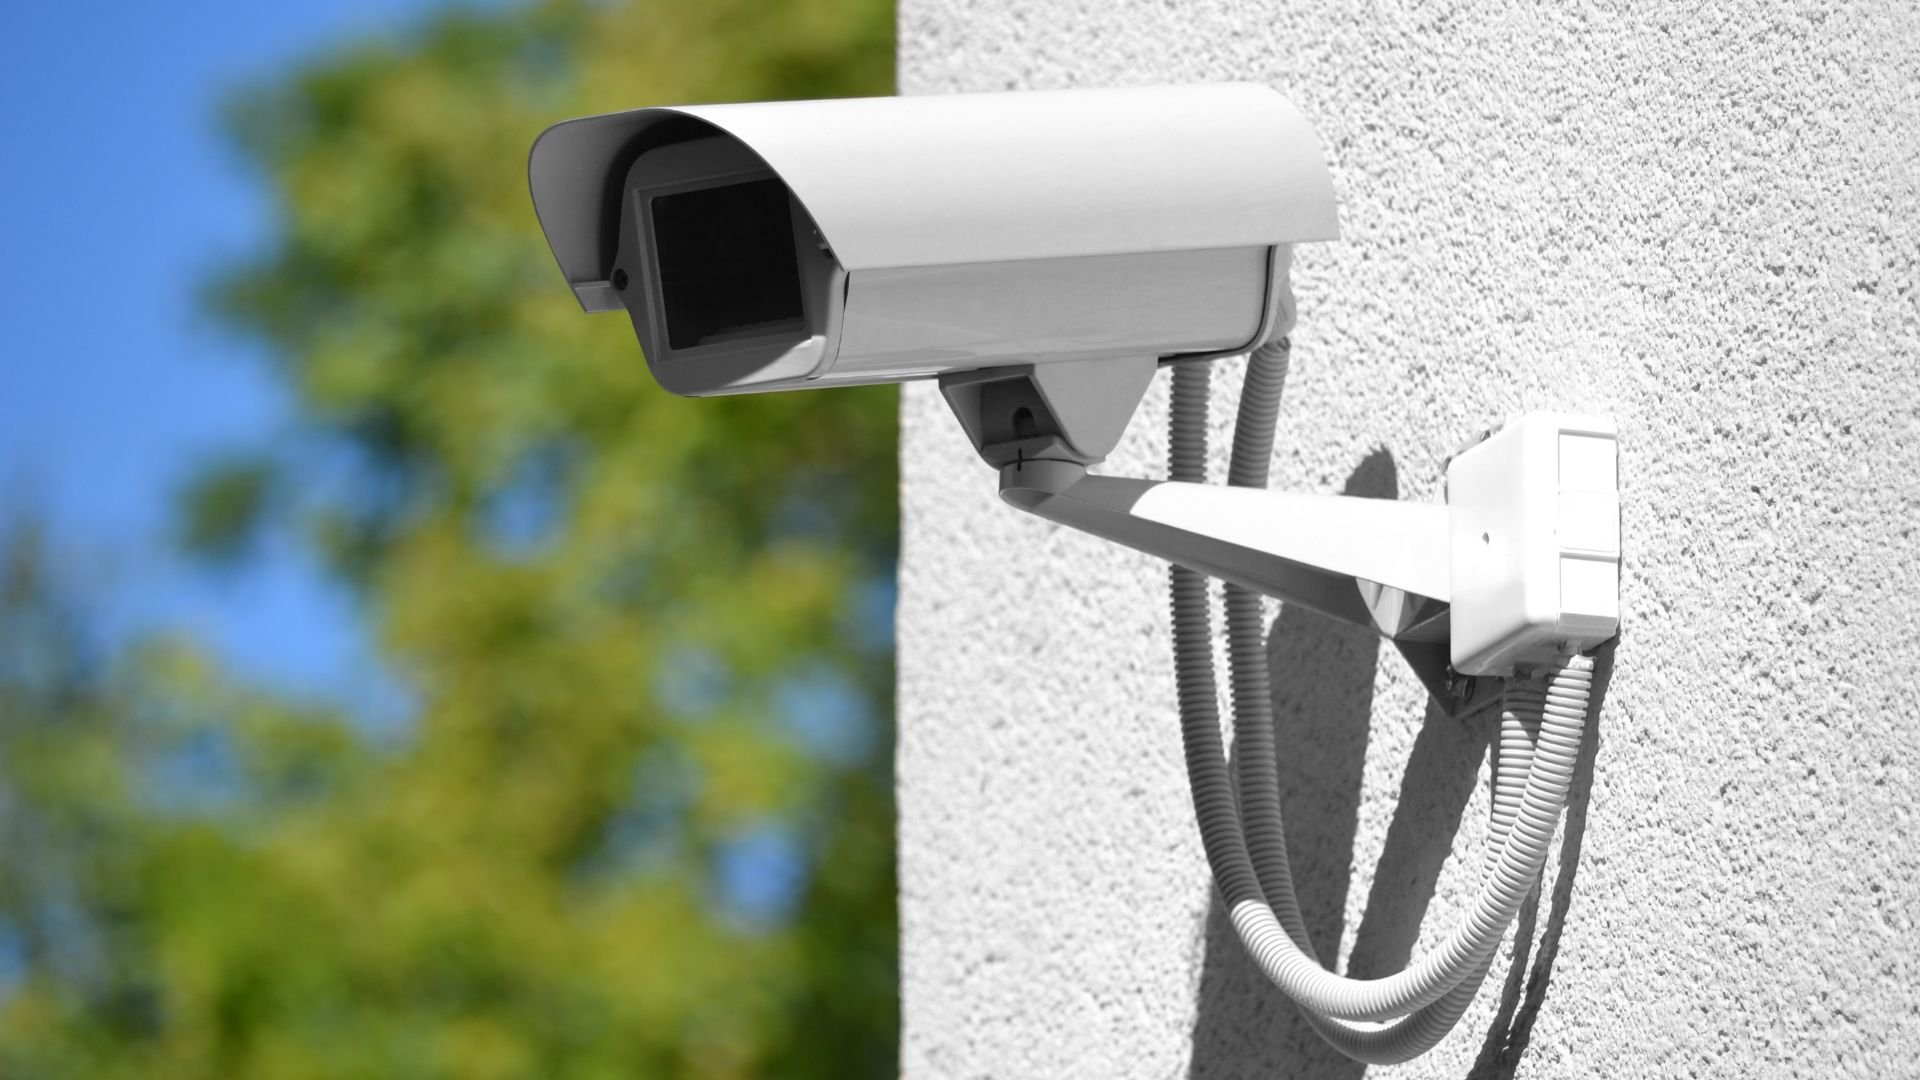 AI powered surveillance camera mounted on wall